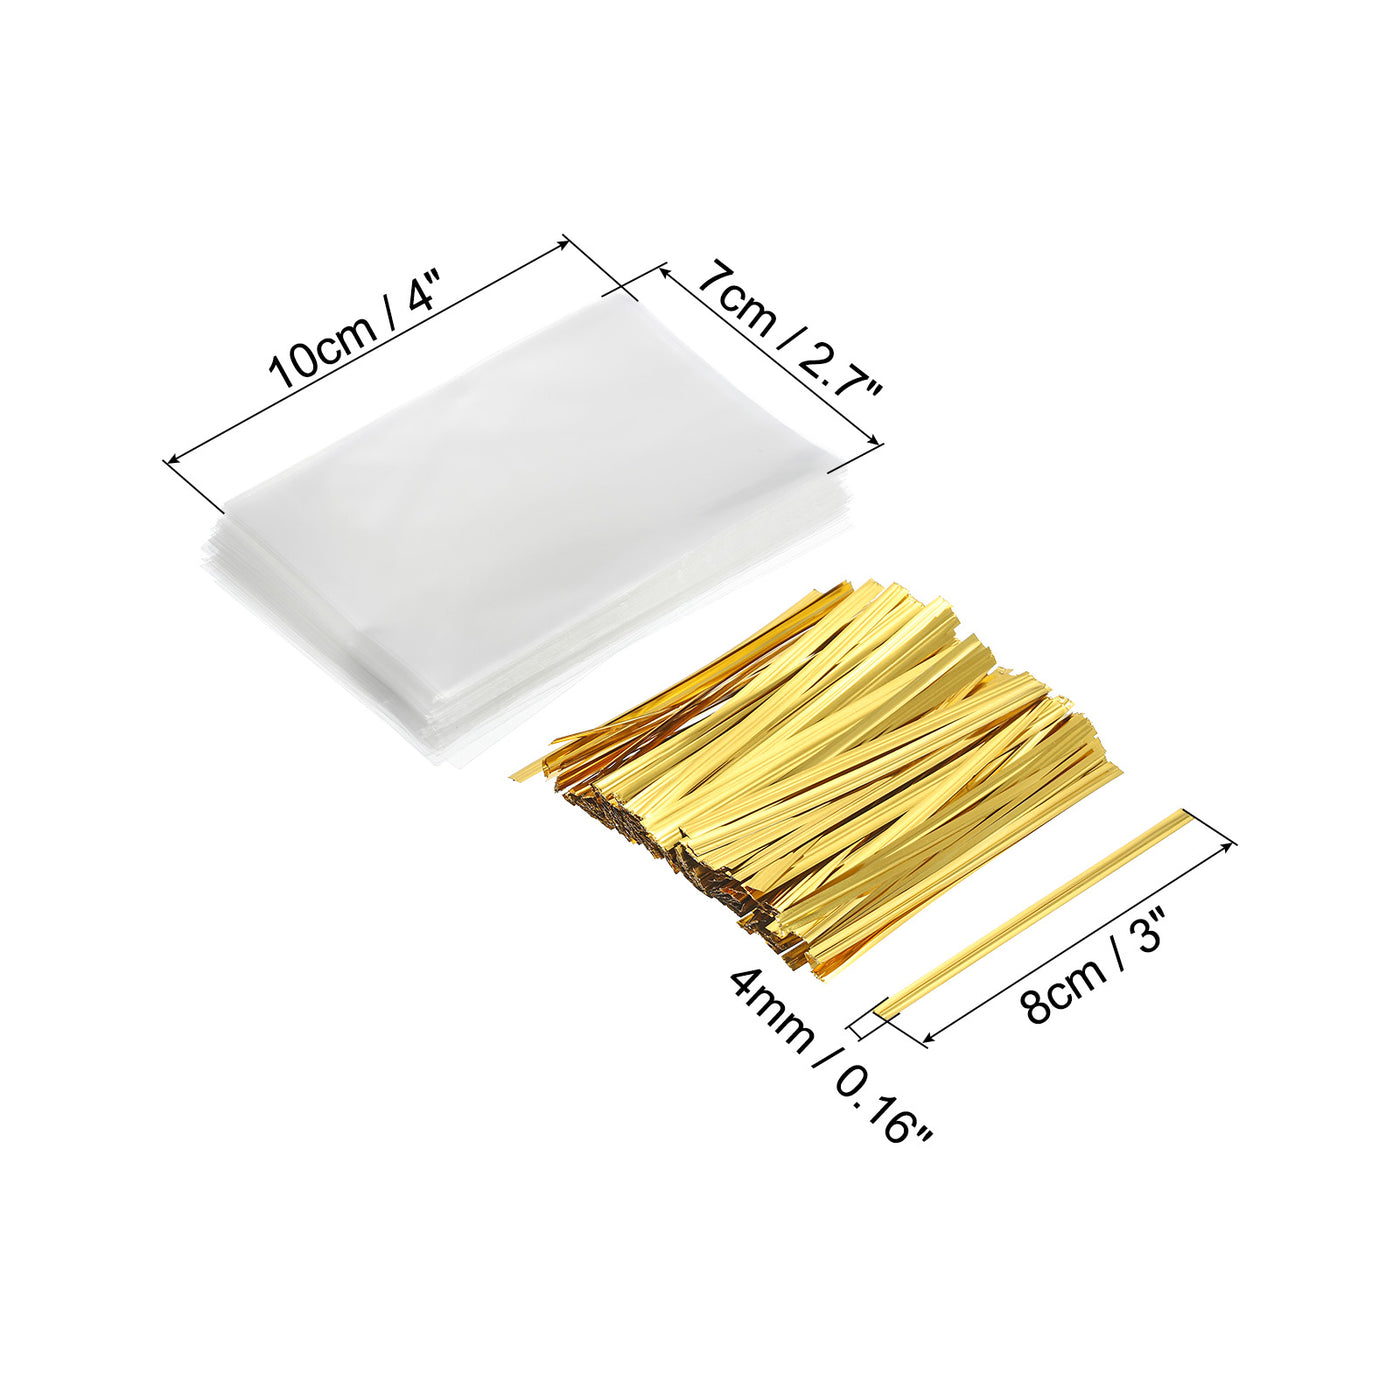 Harfington Clear Plastic Bags 4"x2.5" with 3" Foil Twist Ties Gold Tone 200 Set